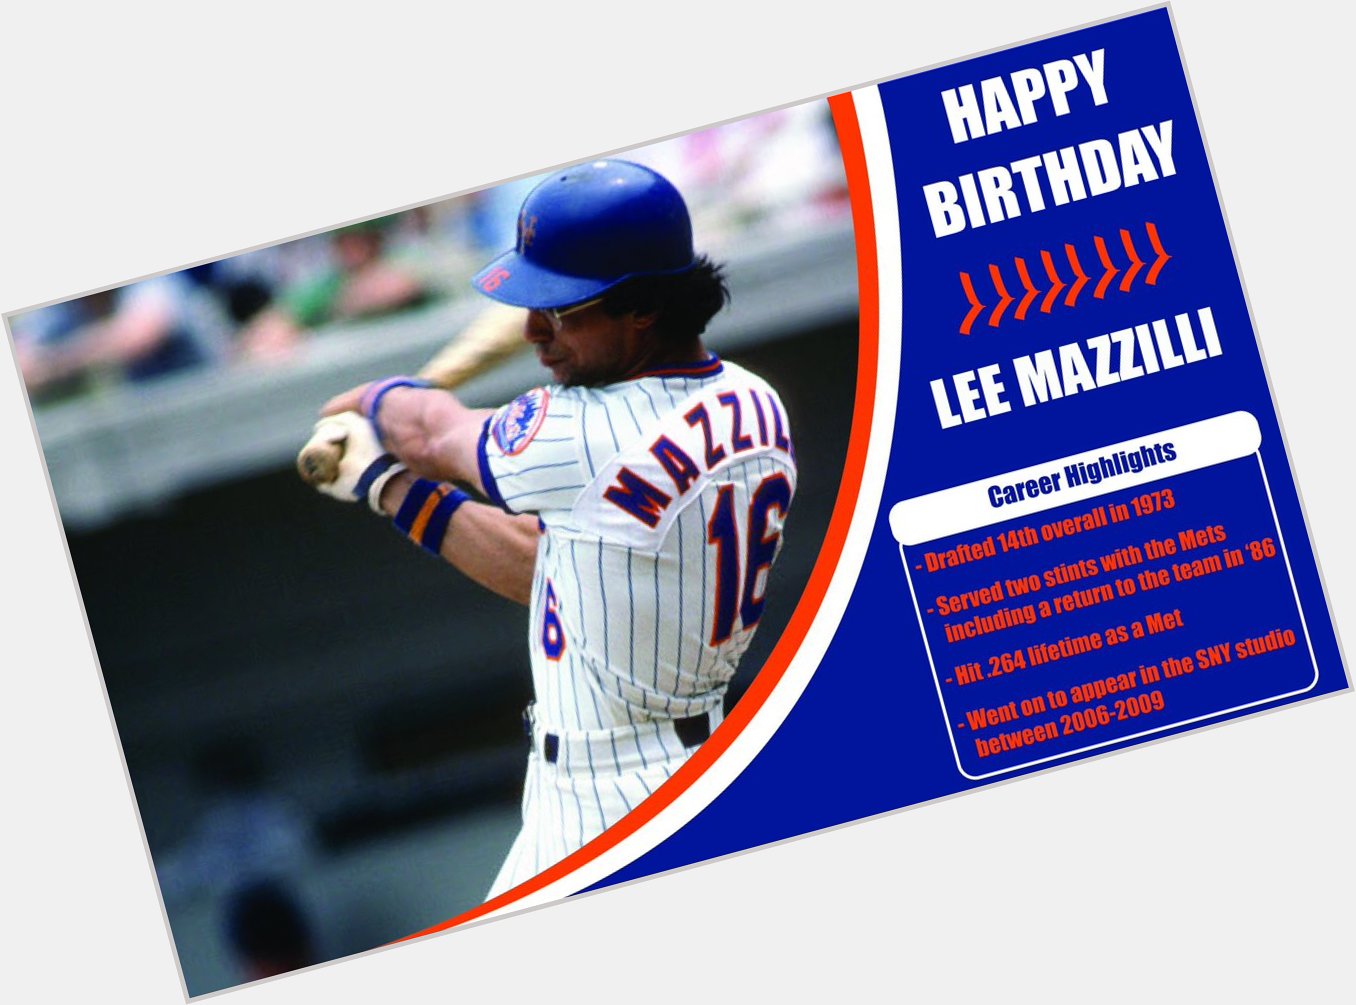  Happy Birthday to Lee Mazzilli! 